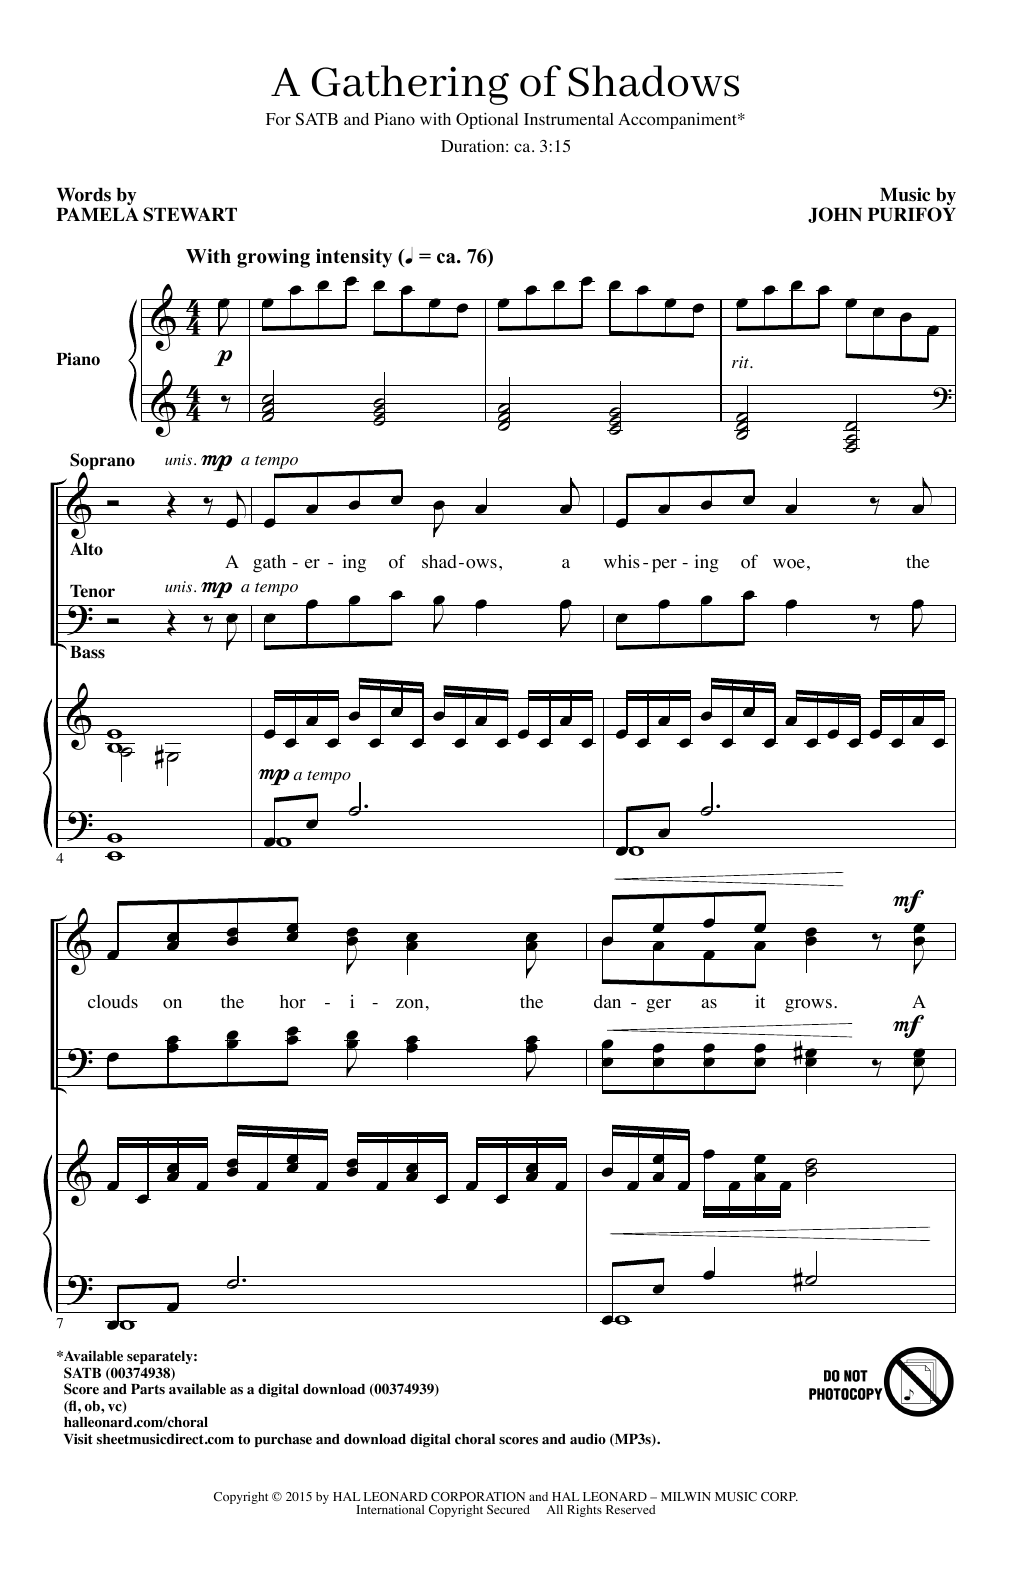 Pamela Stewart & John Purifoy A Gathering Of Shadows Sheet Music Notes & Chords for SATB Choir - Download or Print PDF